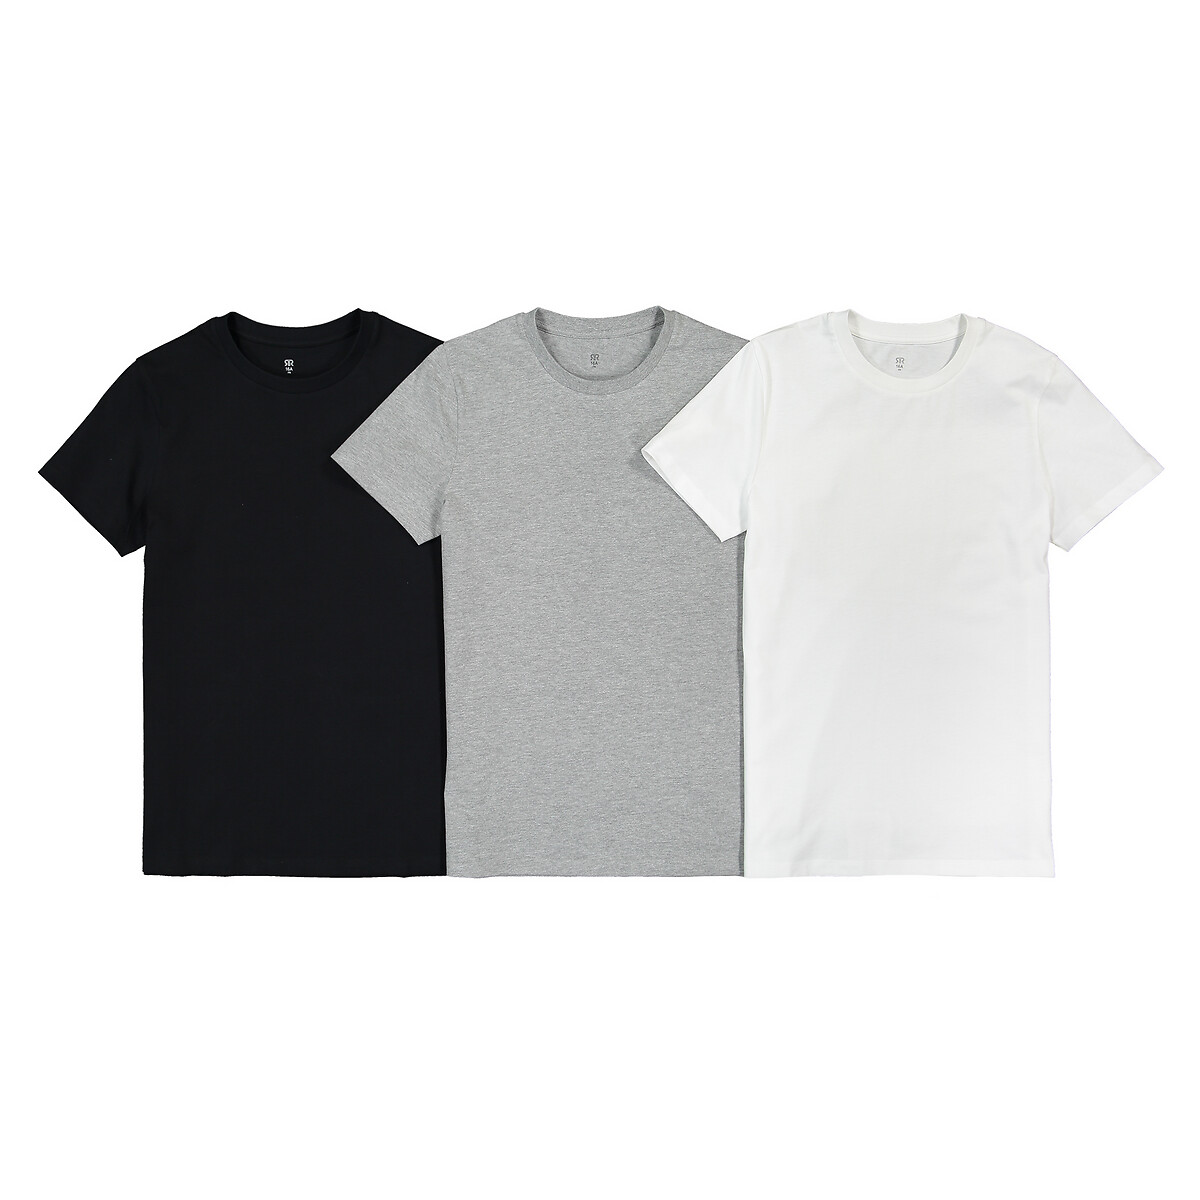 Комлект Из 3х футболок 10-18 лет 14 лет - 162 см белый